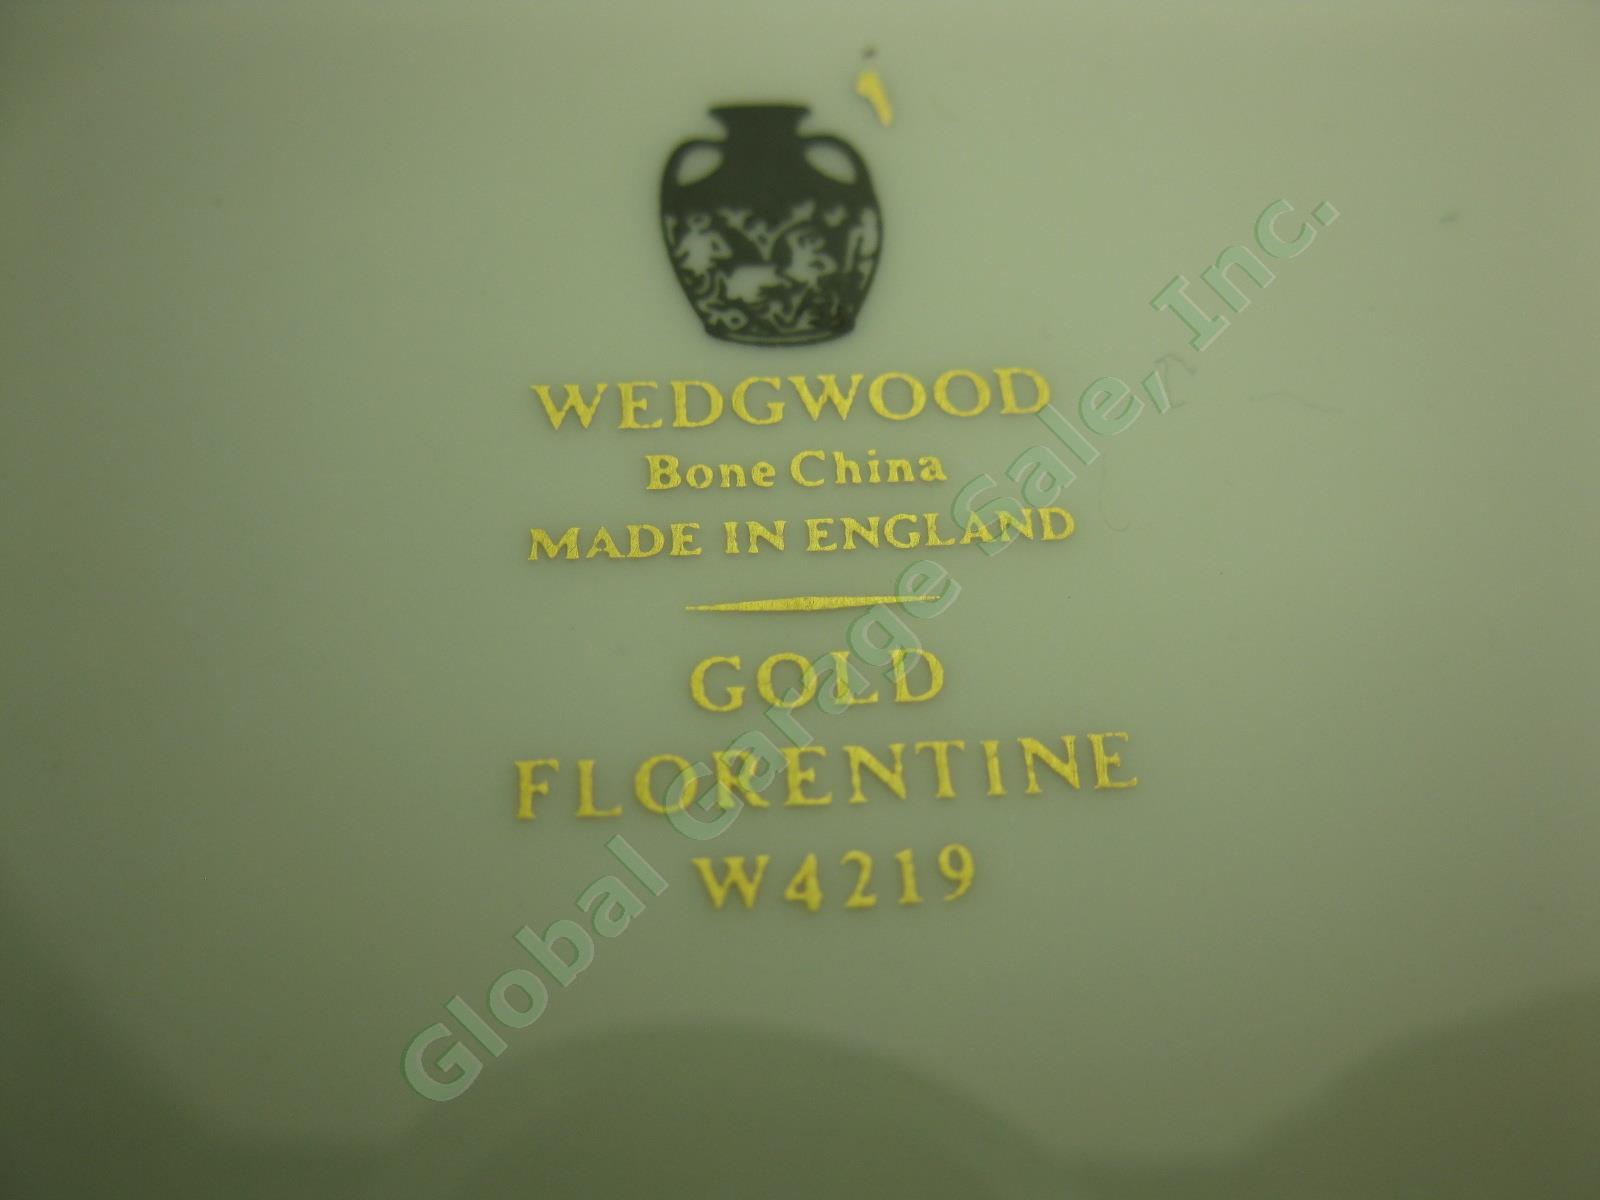 6 Wedgwood Gold Florentine Dragon Bone China 10-3/4" Dinner Plates Set Lot W4219 5